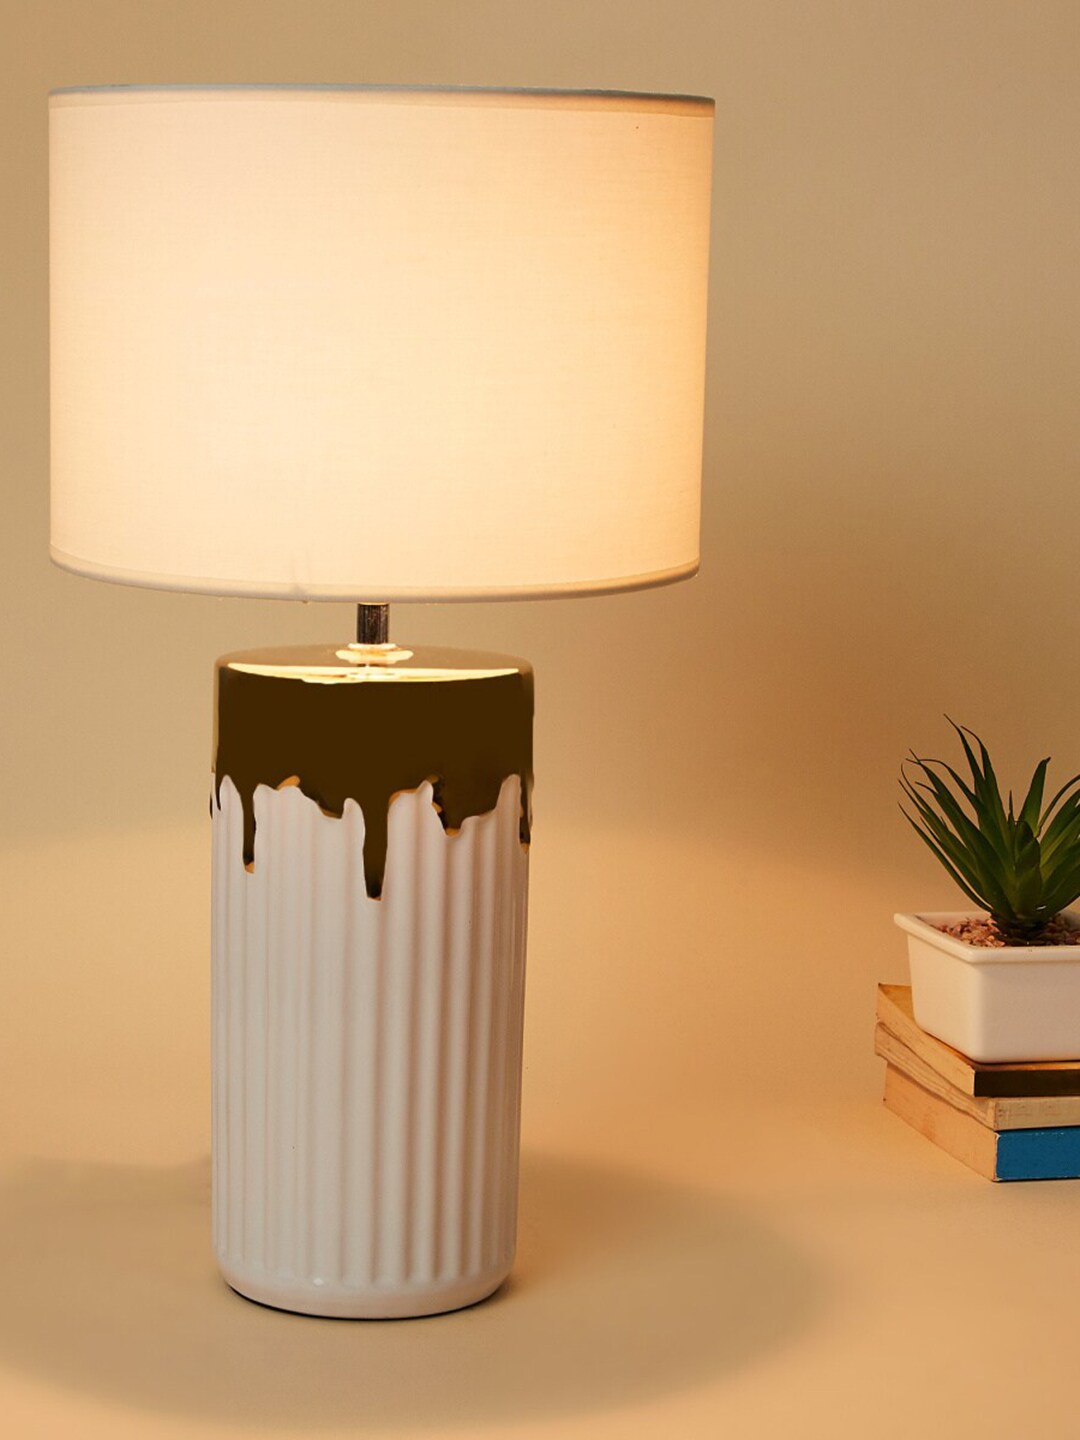 Home Centre White Frustrum Ceramic Electric Table Lamp Price in India